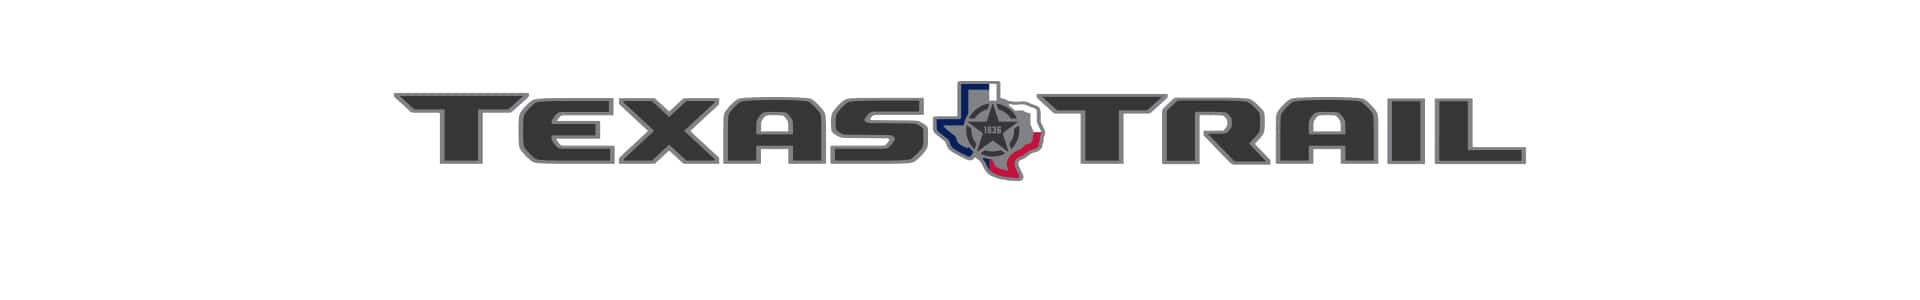 Texas Trail logo